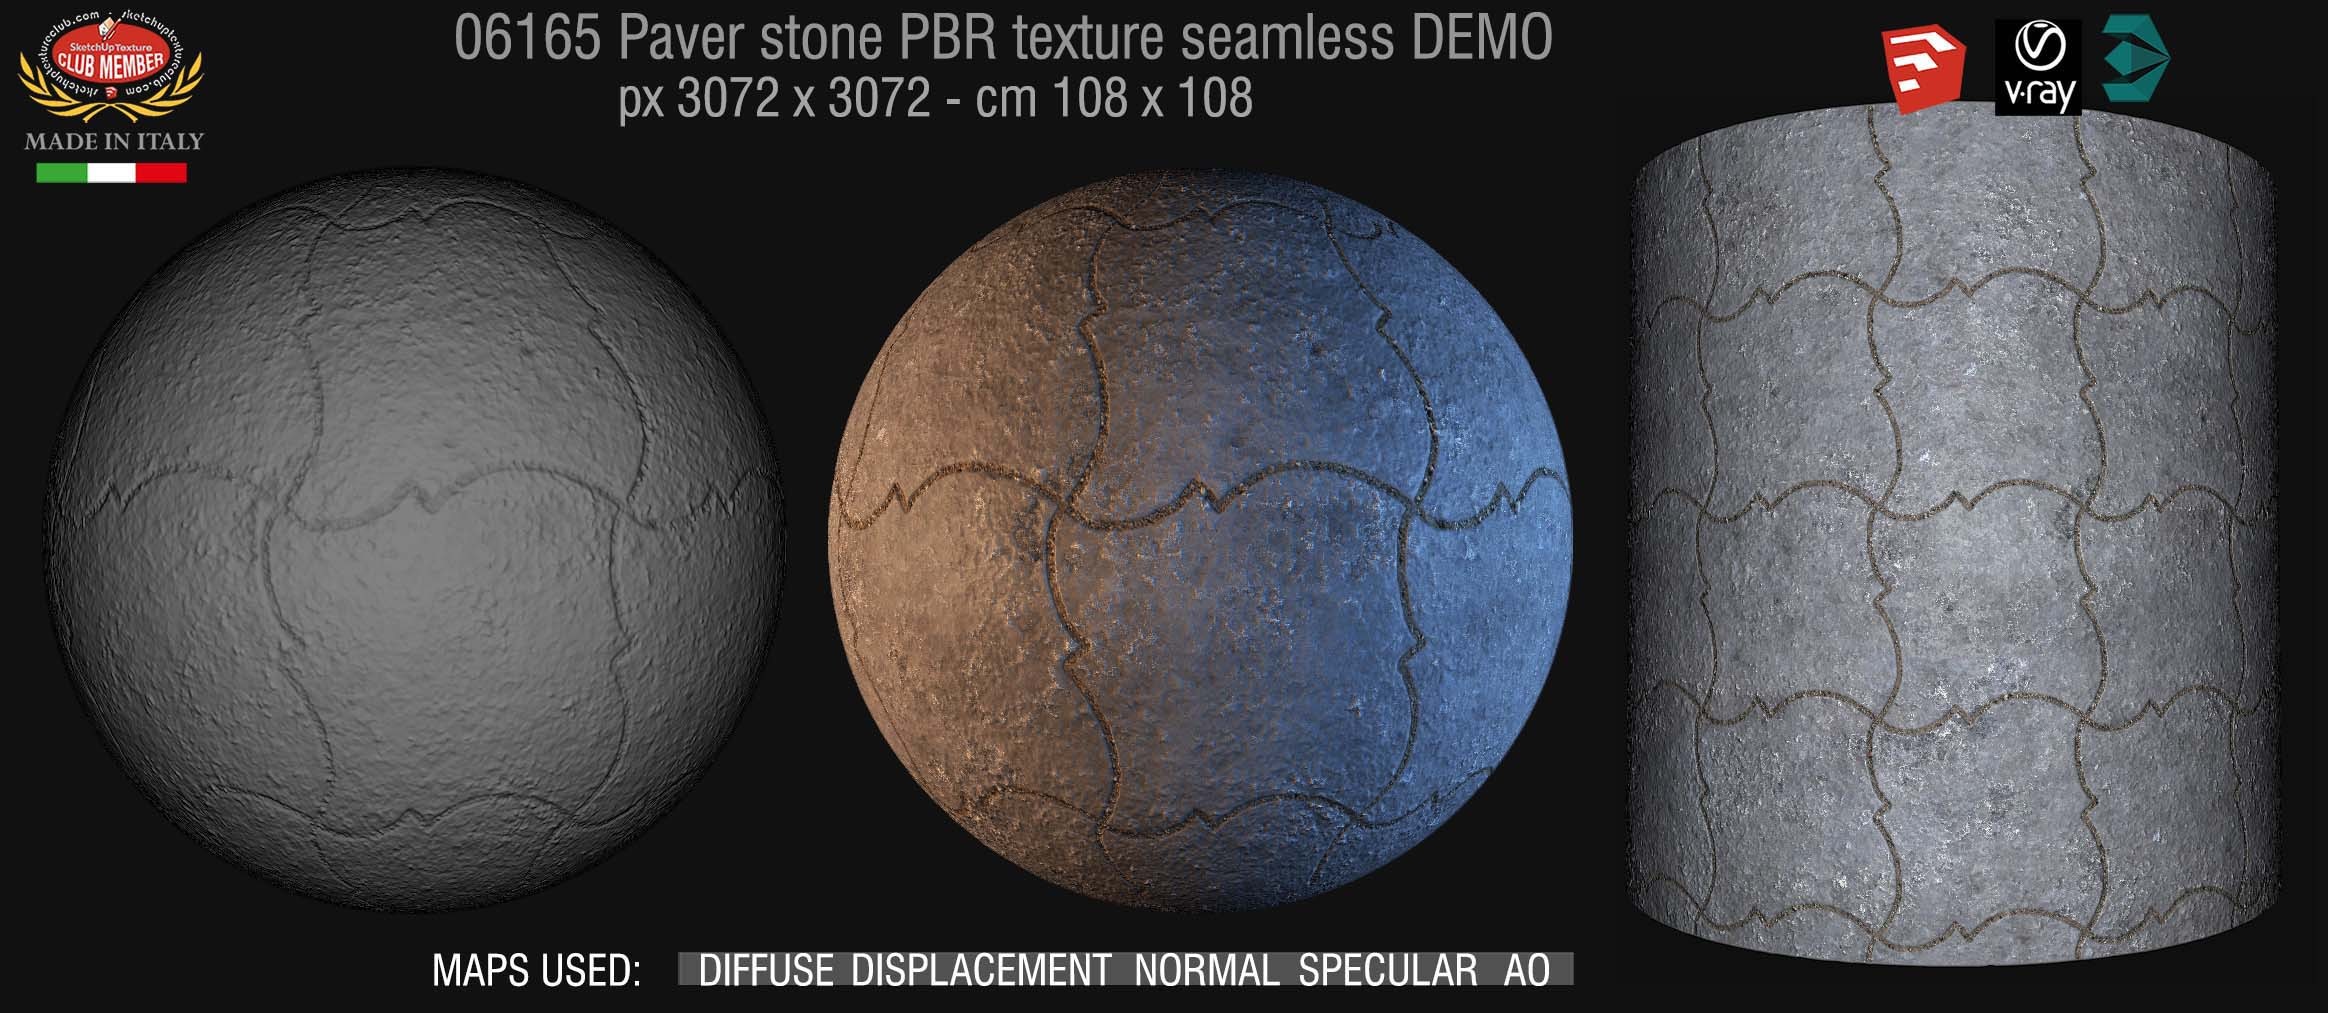 06165 paver stone PBR texture seamless DEMO